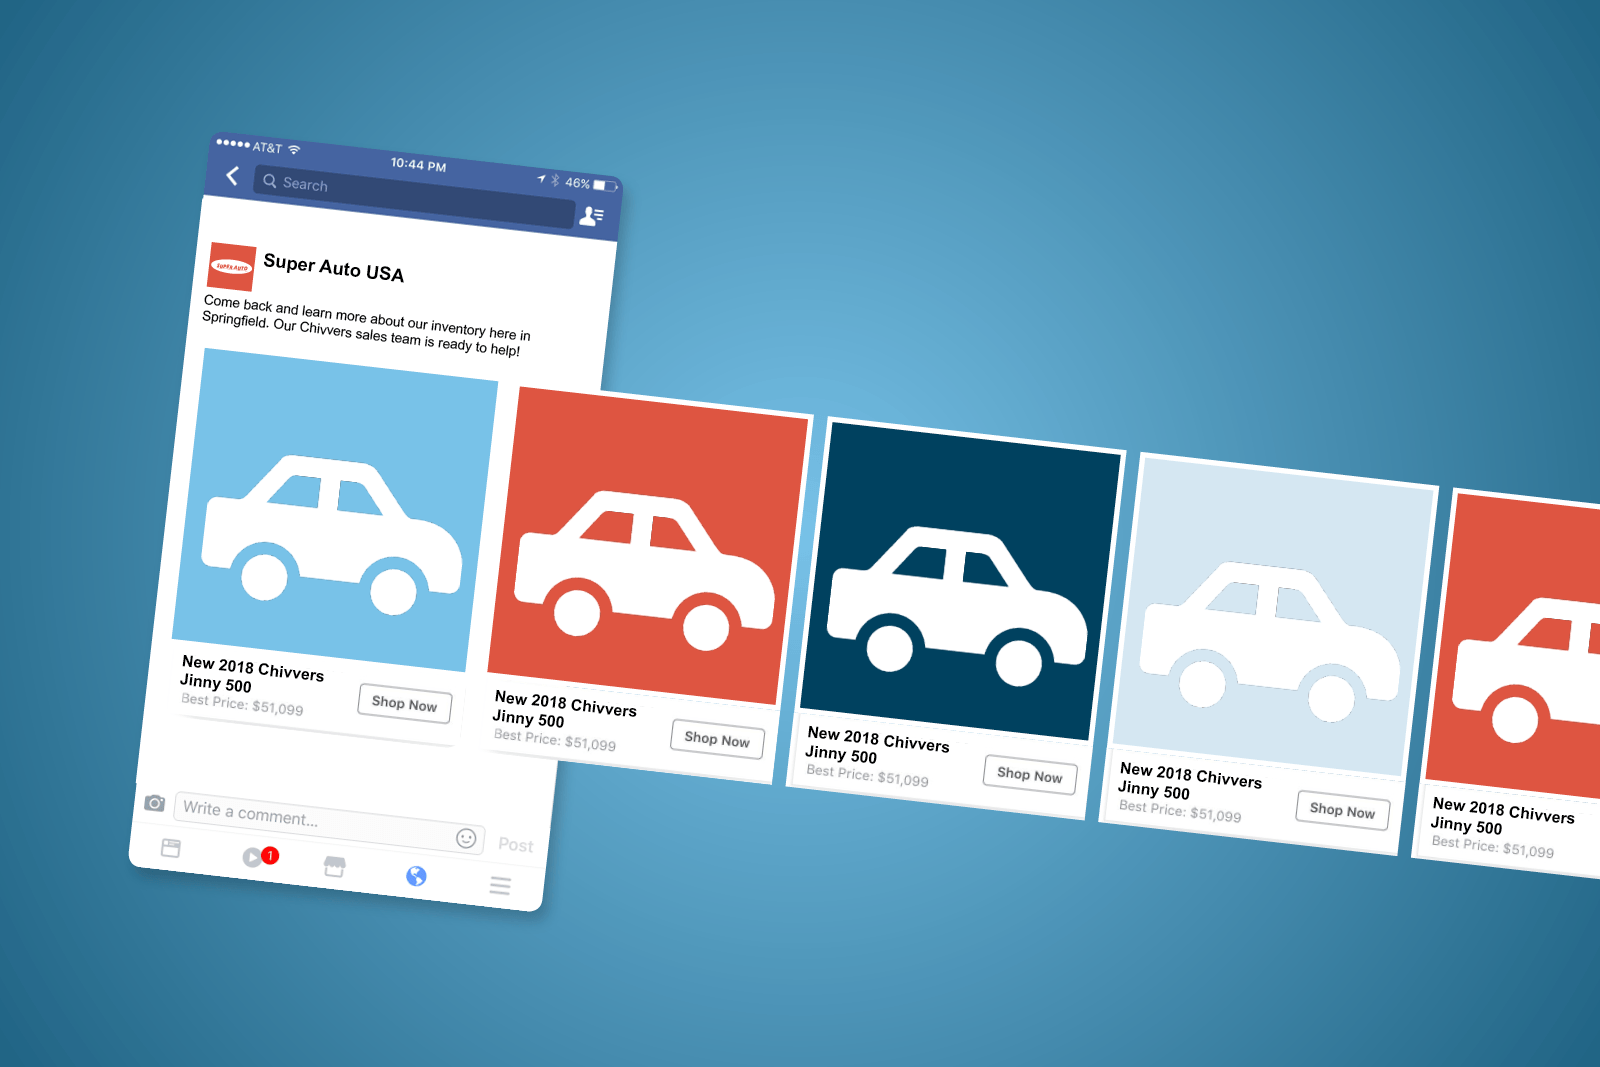 Great Automotive Logo - Ideas for Great Automotive Carousel Ads on Facebook